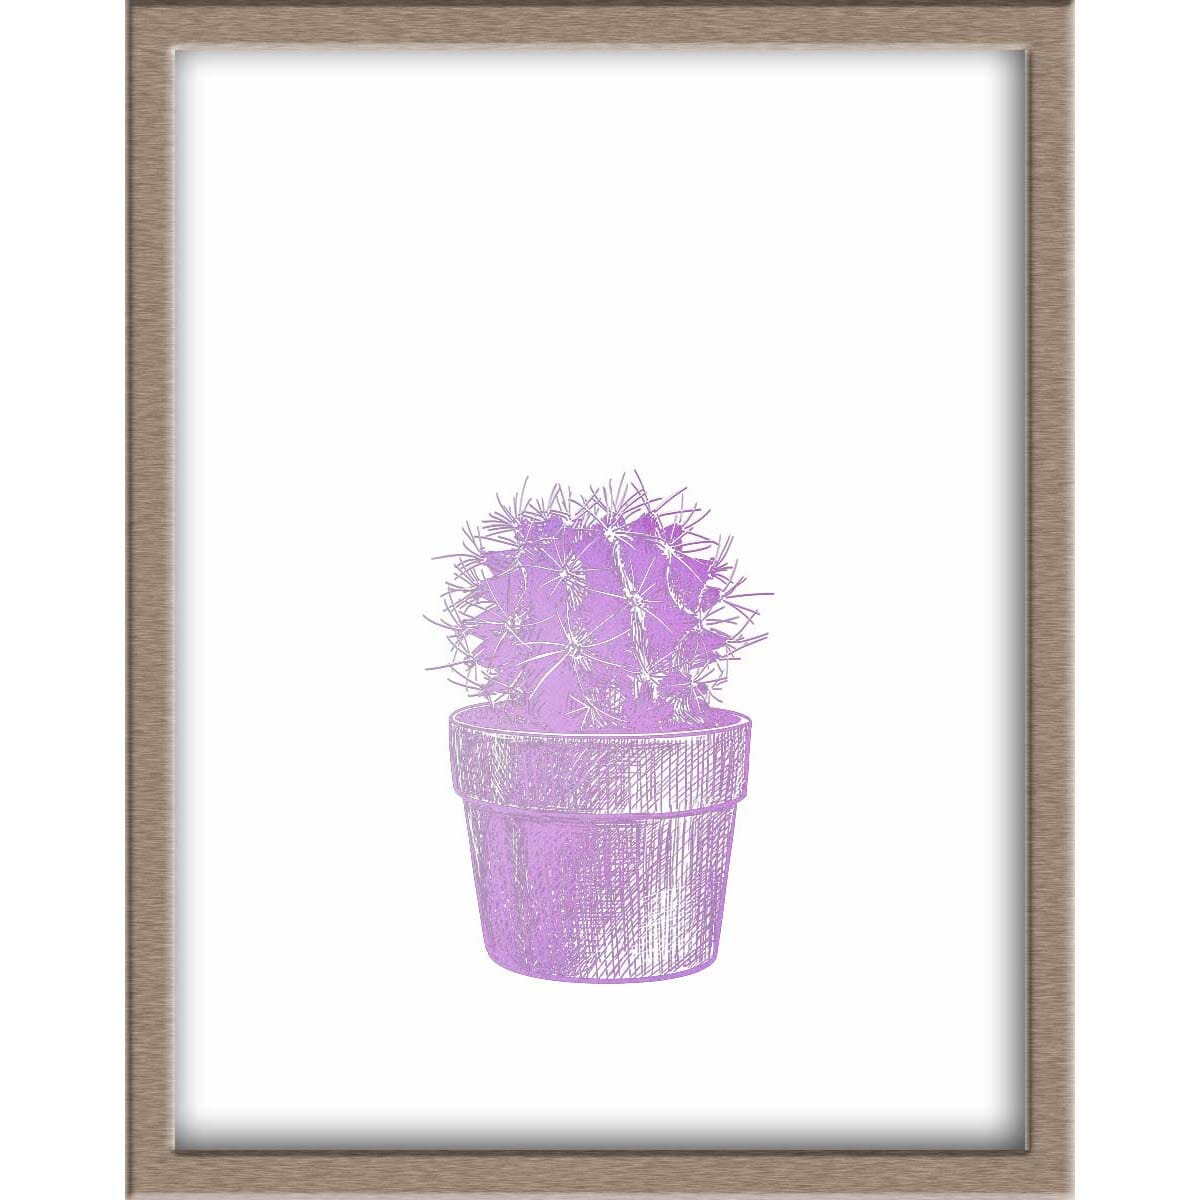 Miniature Potted Ball Cactus Foiled Print Posters, Prints, & Visual Artwork JoyousJoyfulJoyness 